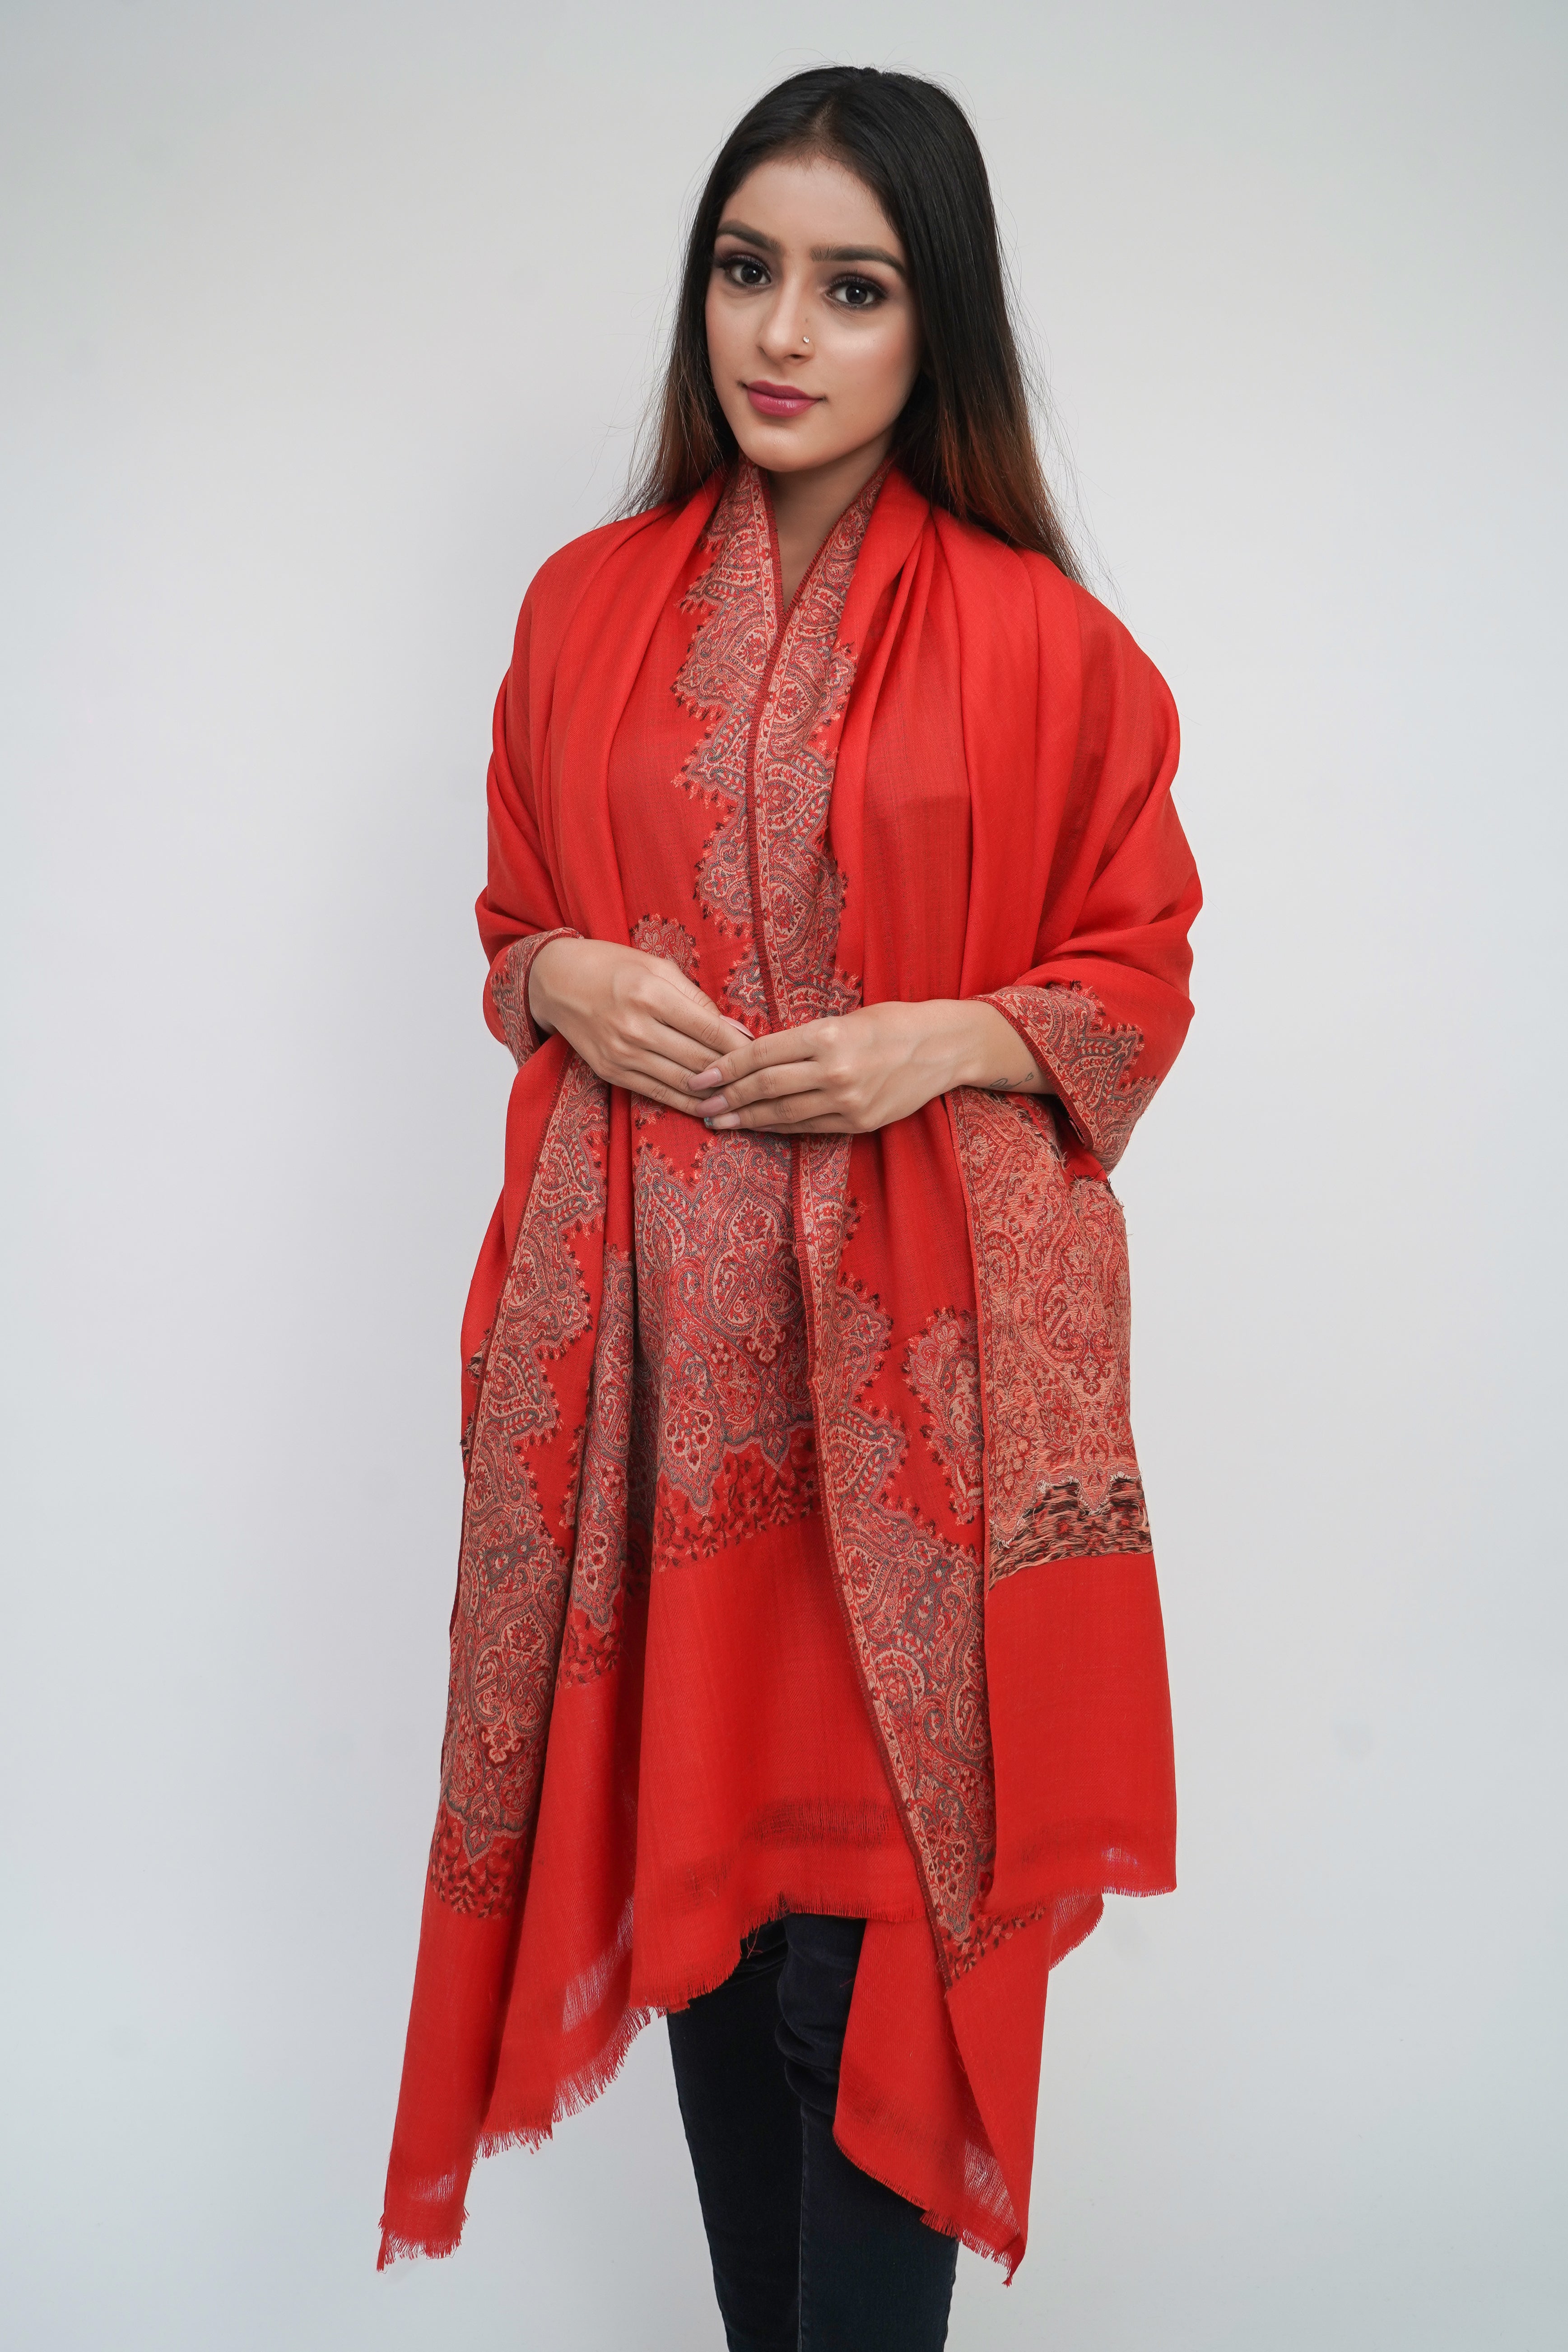 Fine Wool Jacquard Woven  Kashmiri Soft & Warm Red Shawl